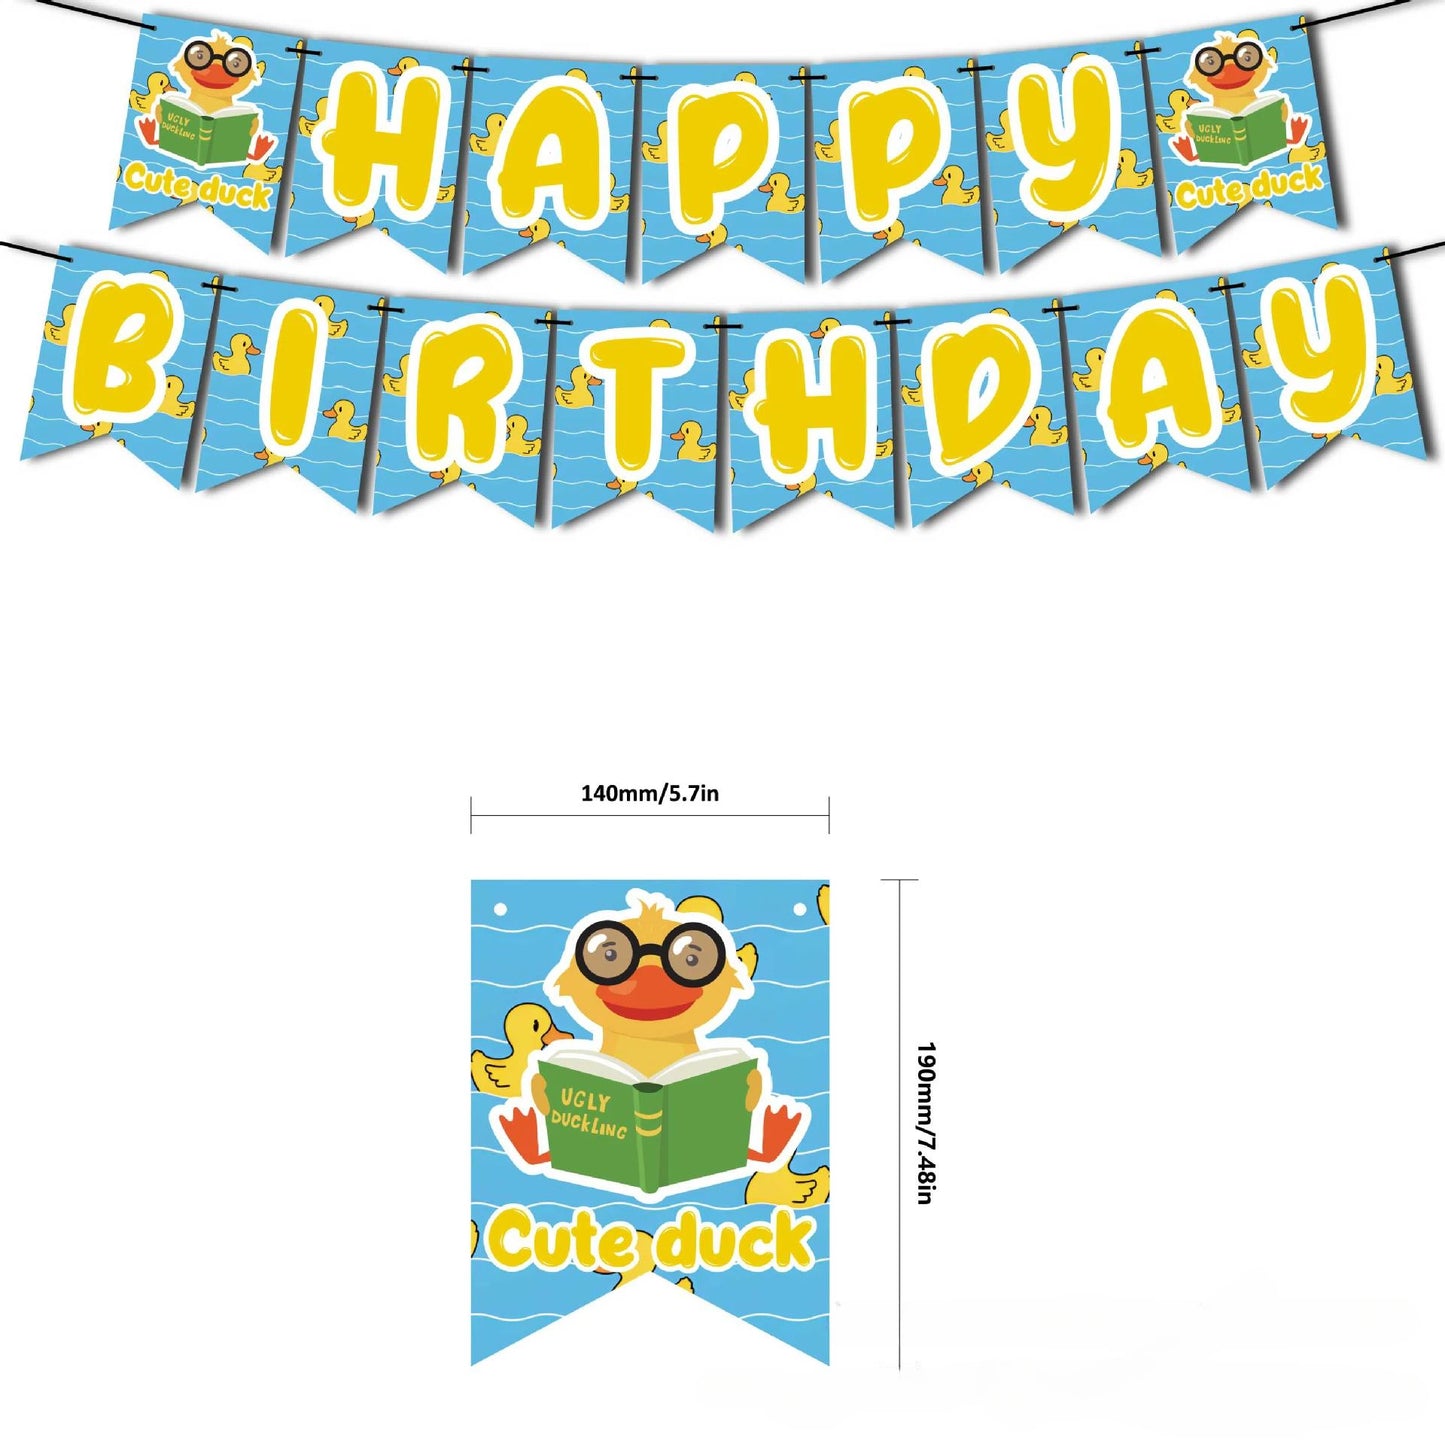 Yellow Duck Theme Birthday Decorations Set Cute Duck Balloon Cake Topper Birthday Banner Little Yellow Duck Birthday Party Decor